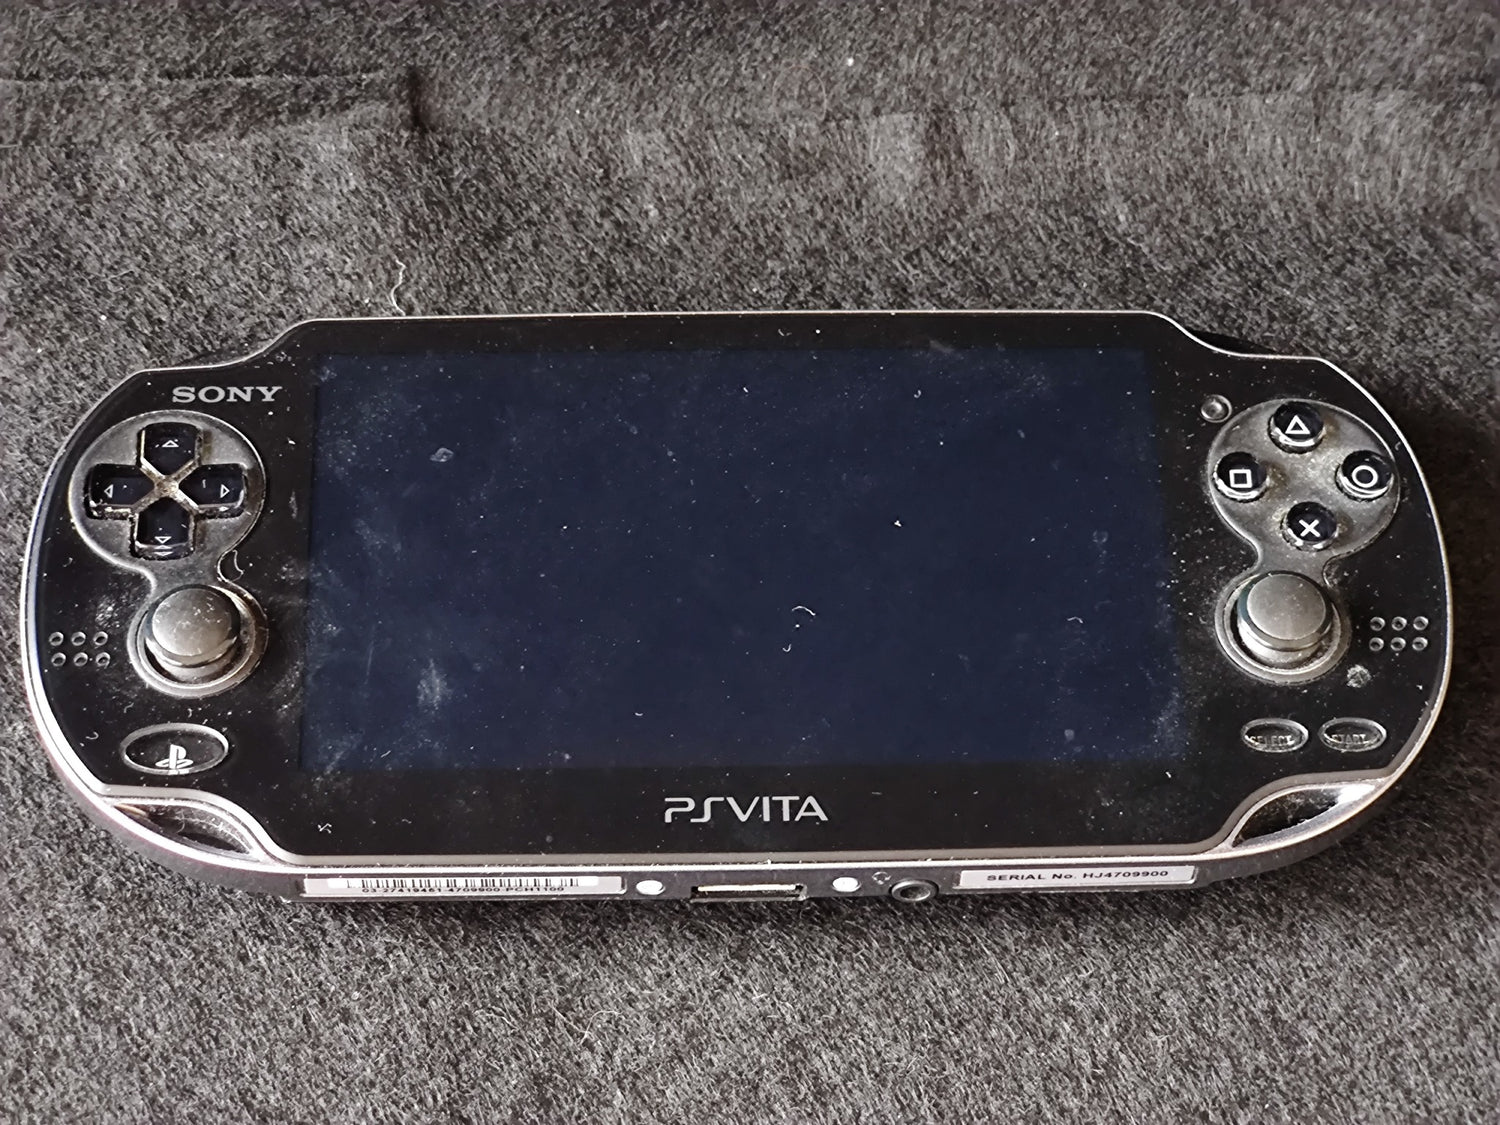 SONY PS Vita PCH-1100 Black Console, w/Manual Box set, Working-f0623-